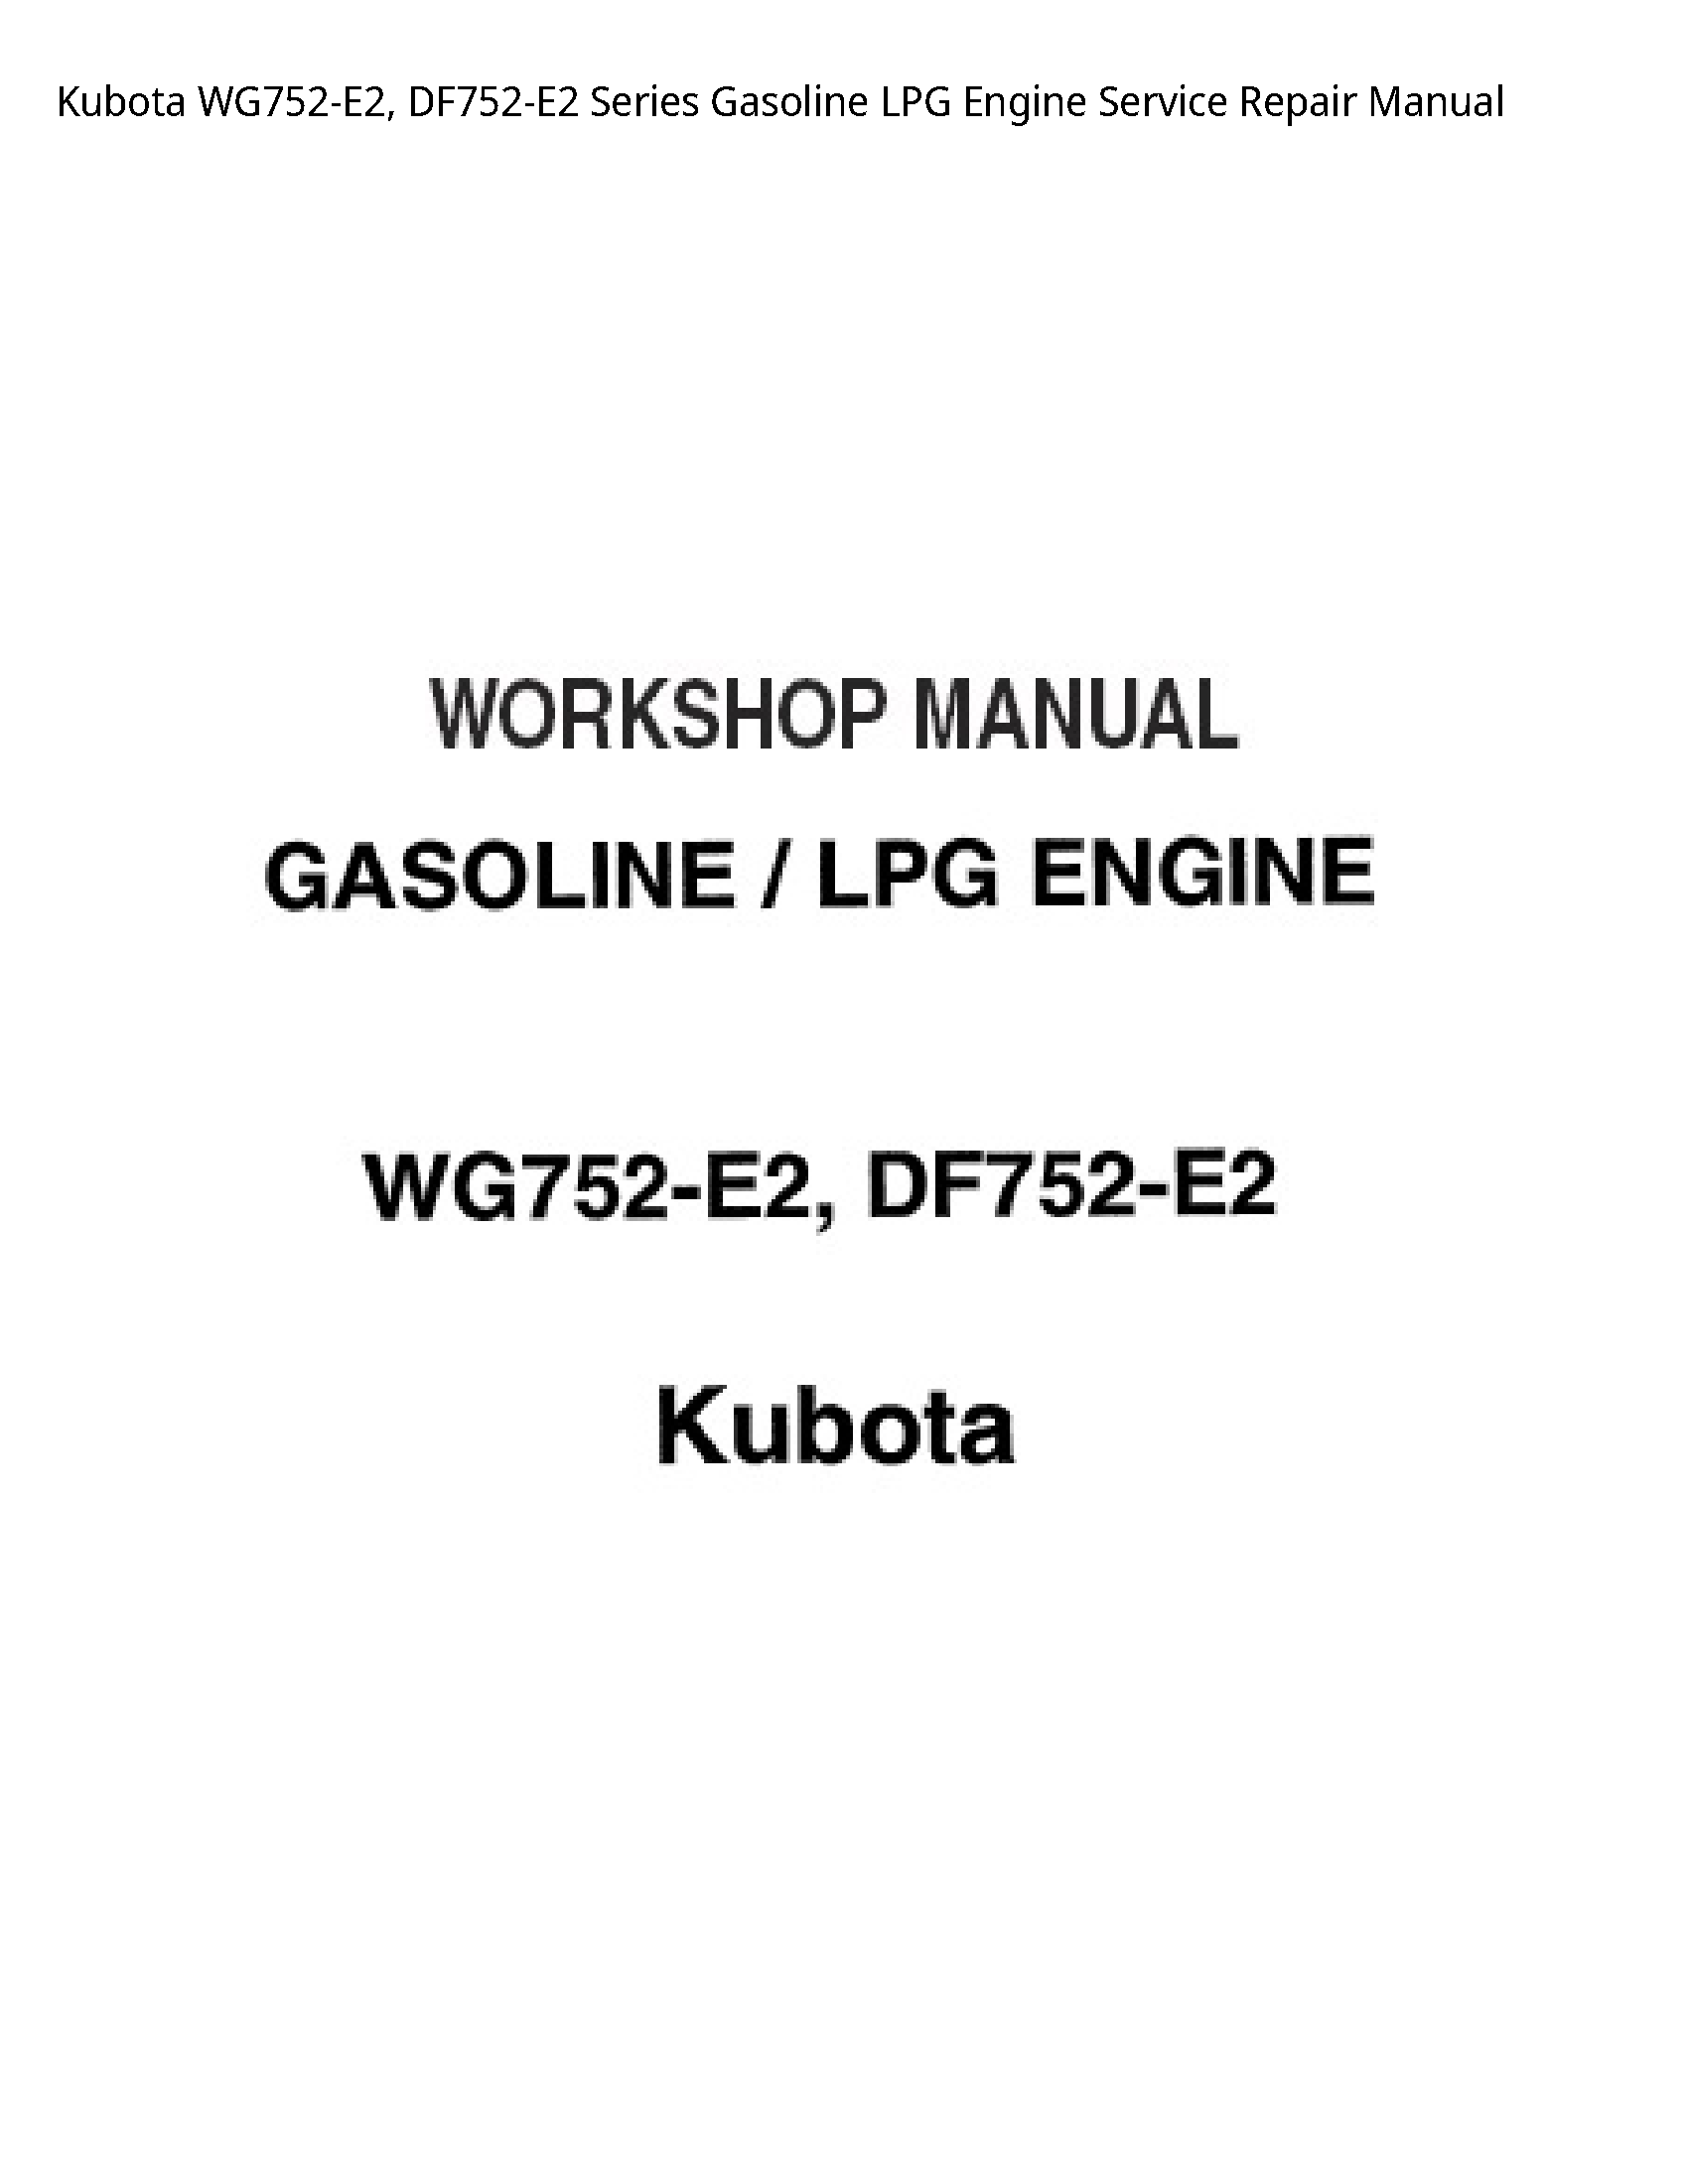 Kubota WG752-E2  DF752-E2 Series Gasoline LPG Engine Service Repair Manual